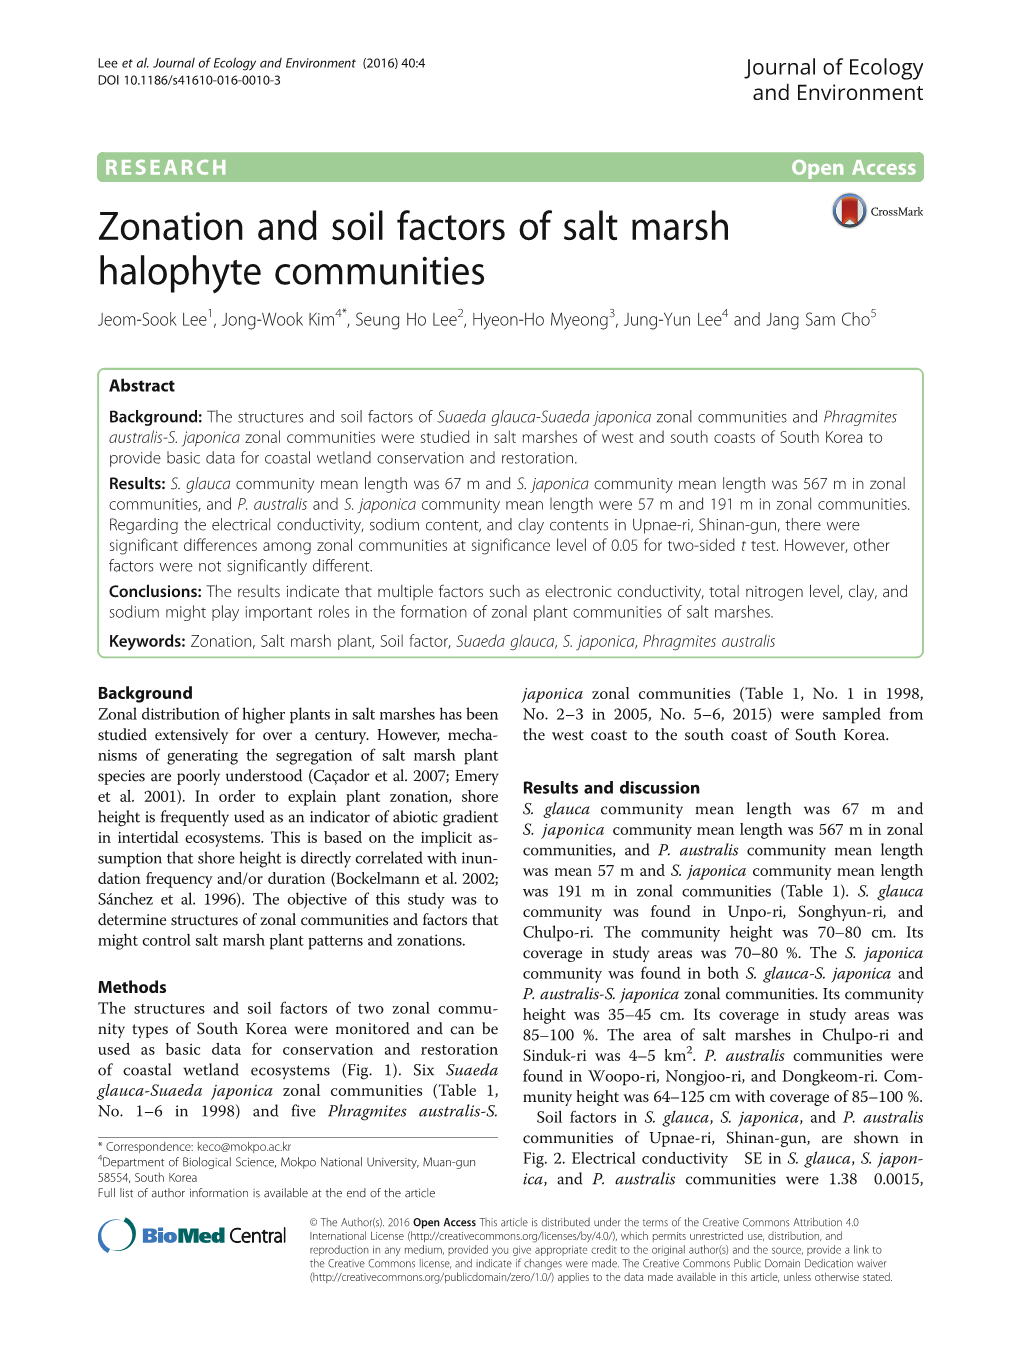 Zonation and Soil Factors of Salt Marsh Halophyte Communities Jeom-Sook Lee1, Jong-Wook Kim4*, Seung Ho Lee2, Hyeon-Ho Myeong3, Jung-Yun Lee4 and Jang Sam Cho5